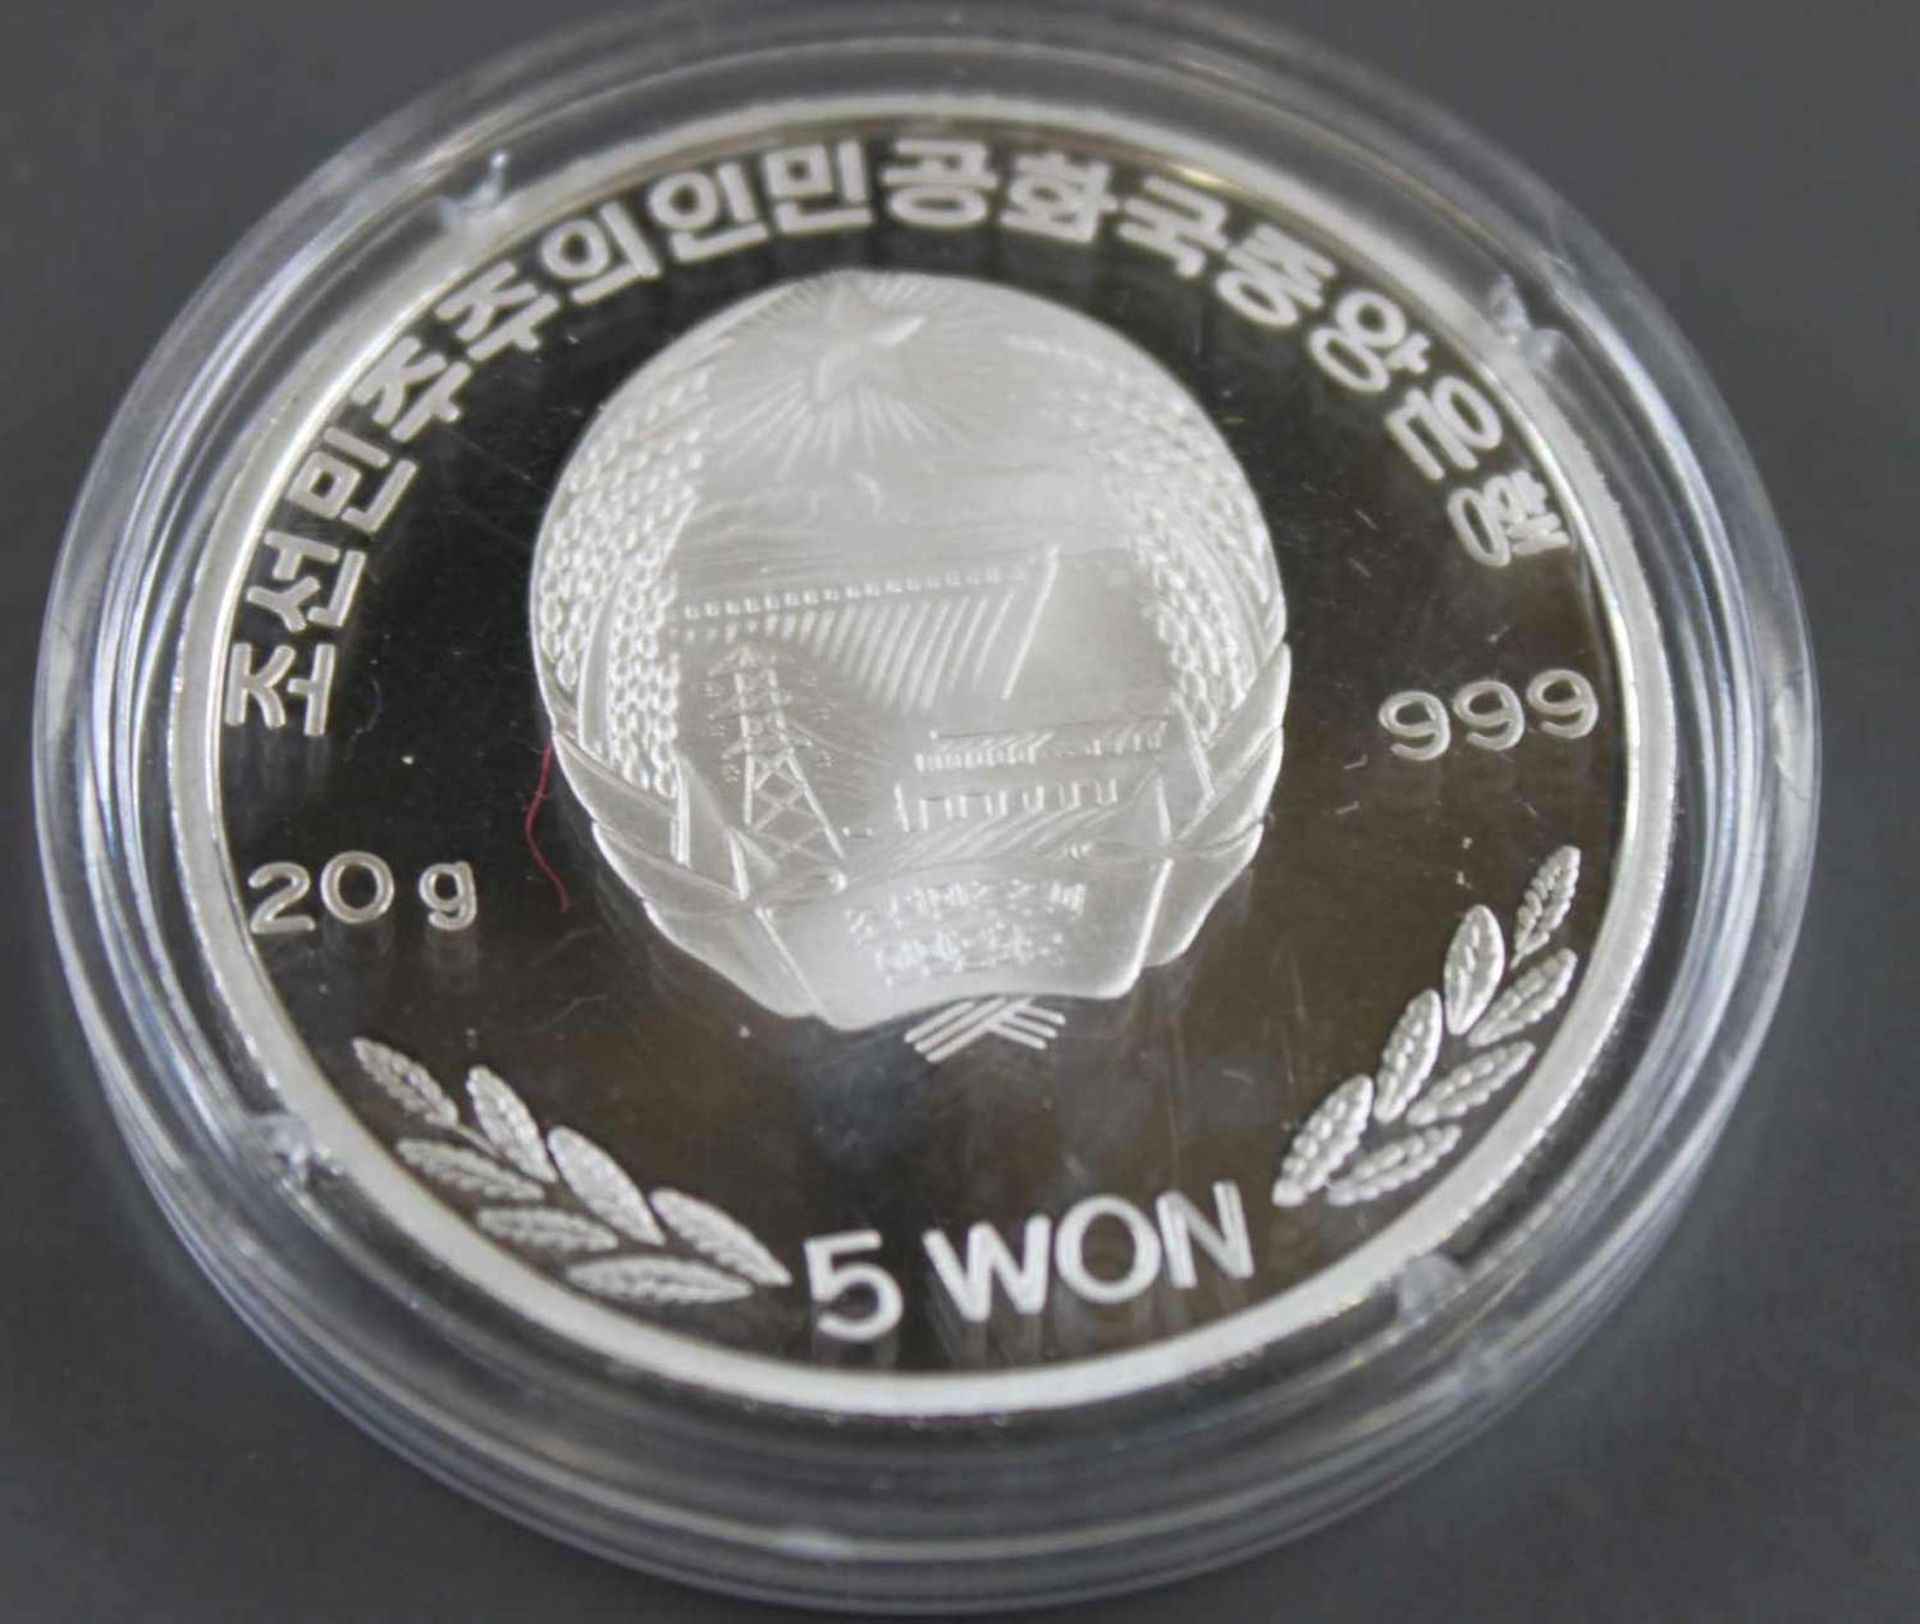 Volksrepublik Korea 2003, 5 Won - Silbermünze "Lord Nelson". Silber 999, Gewicht: 20 g. In Kapsel.